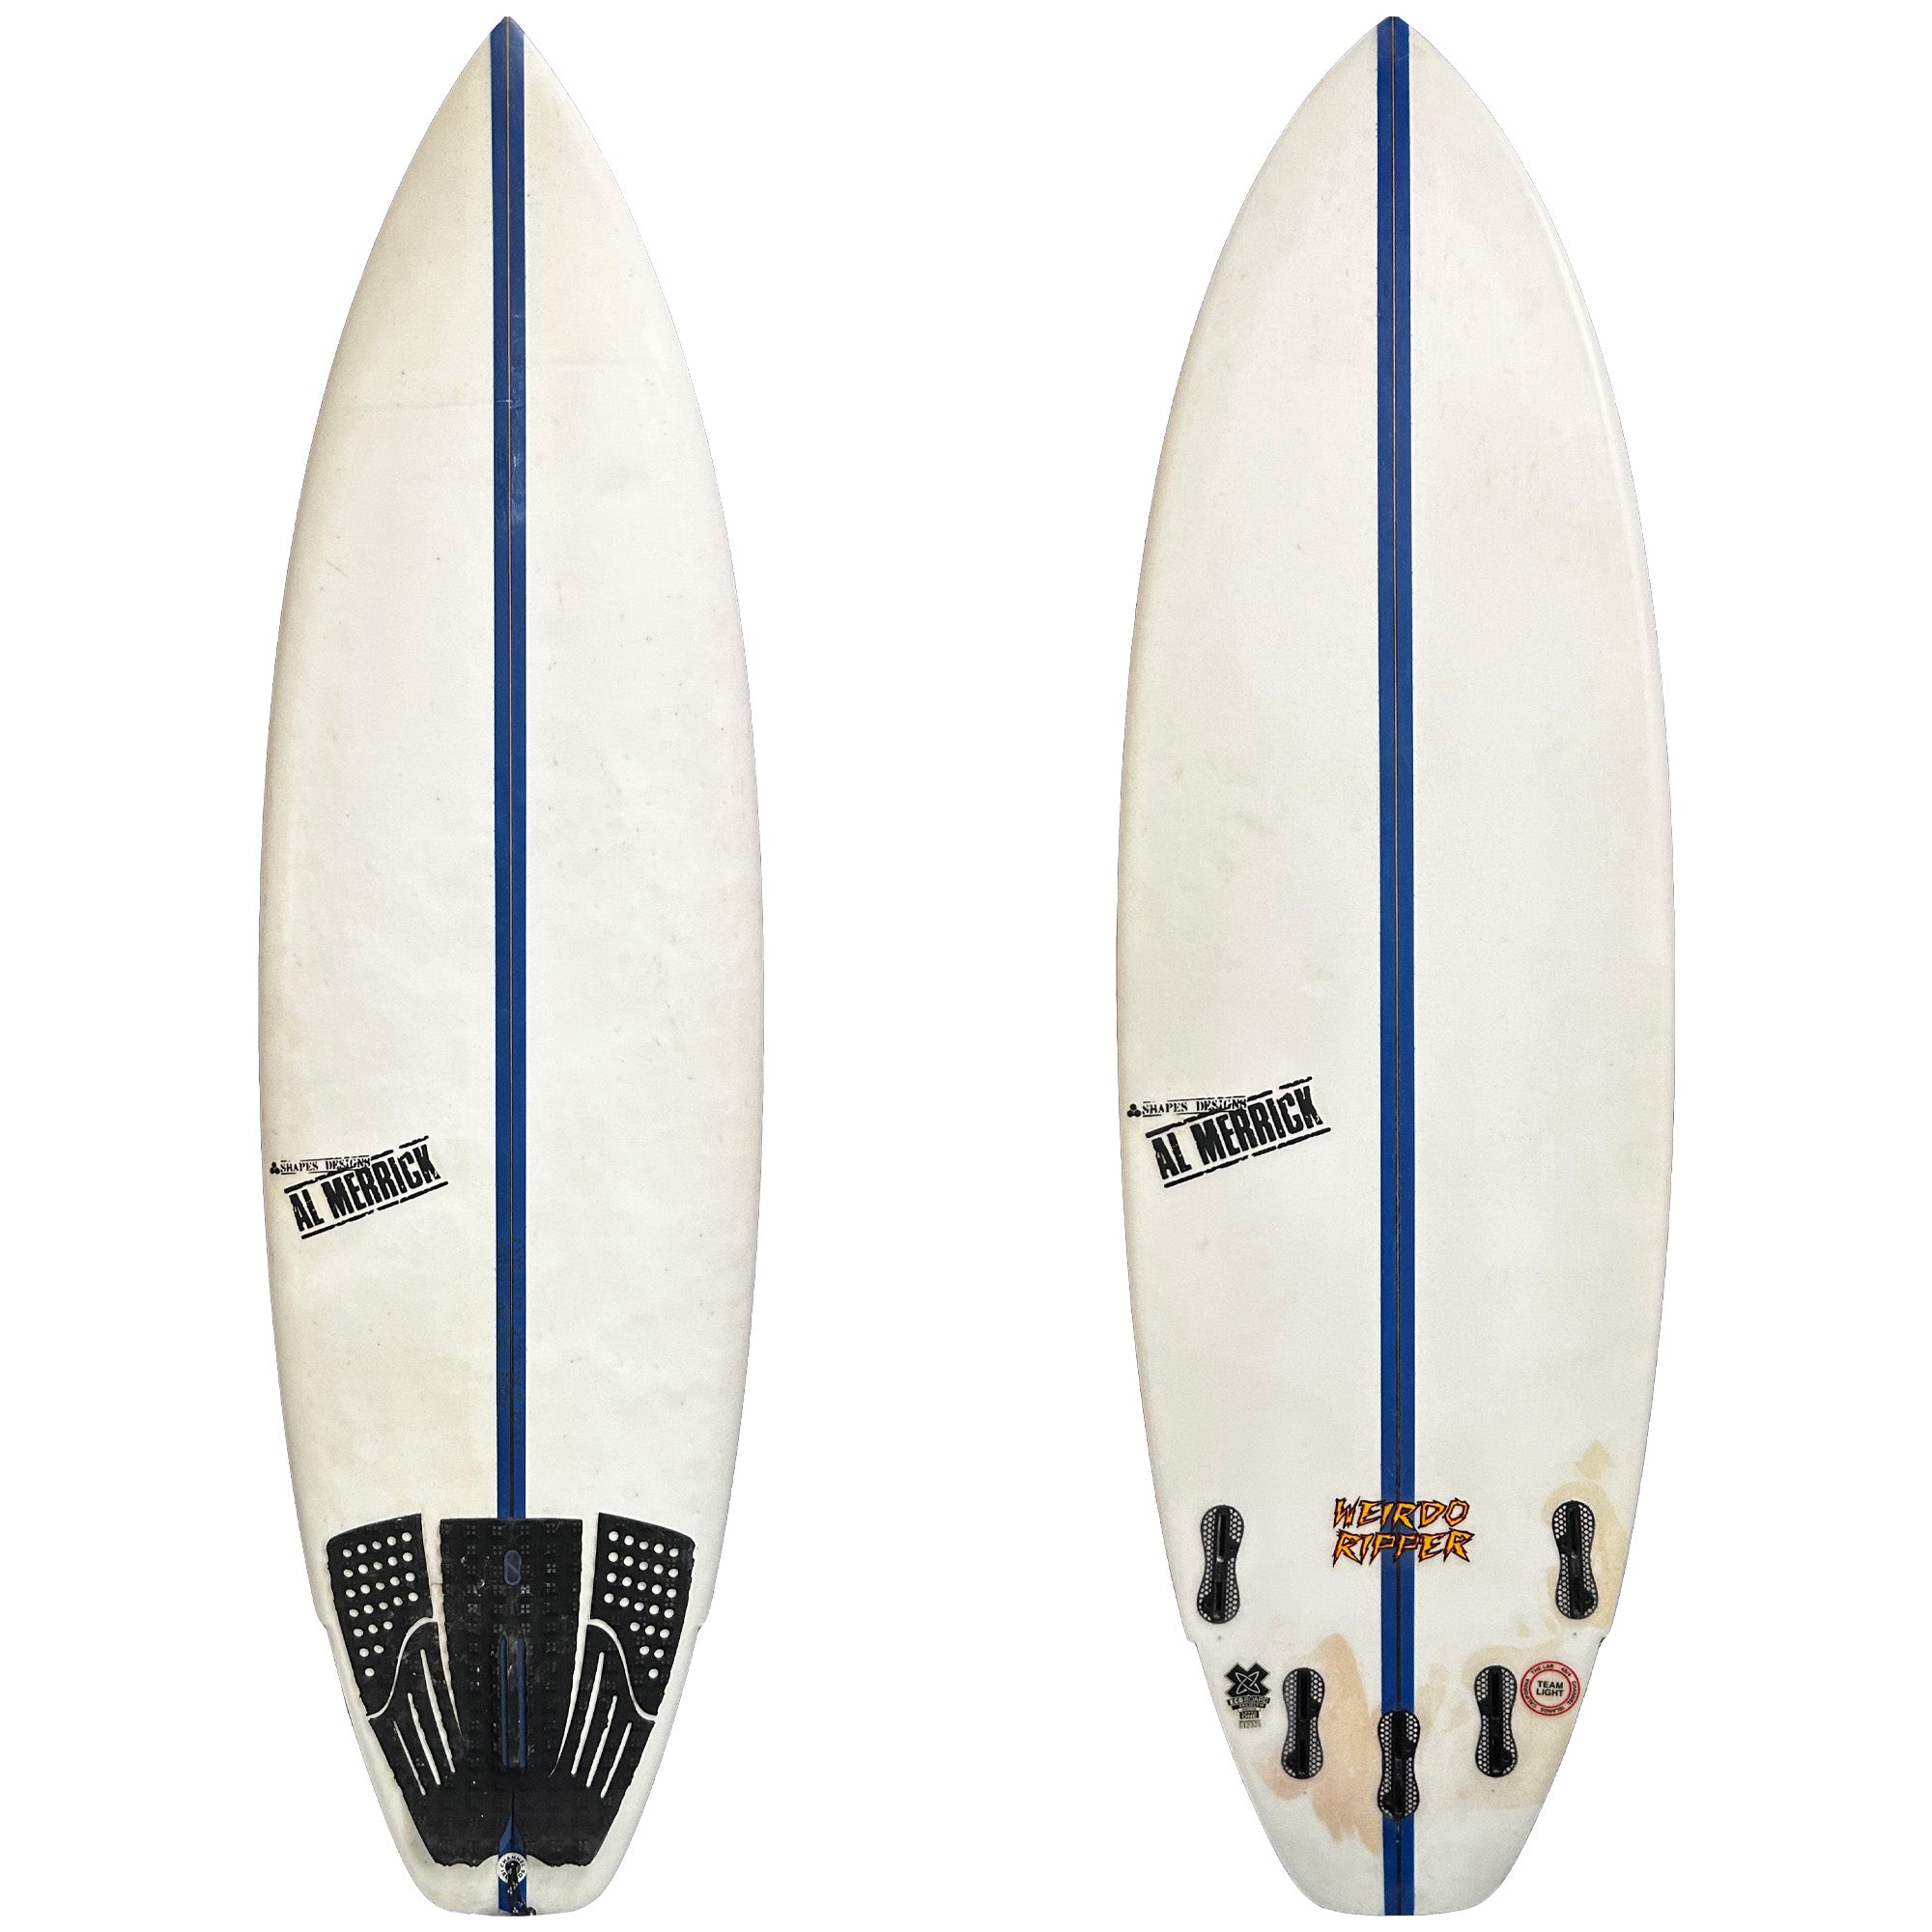 Channel Islands Weirdo Ripper 5'7 1/2 Consignment Surfboard